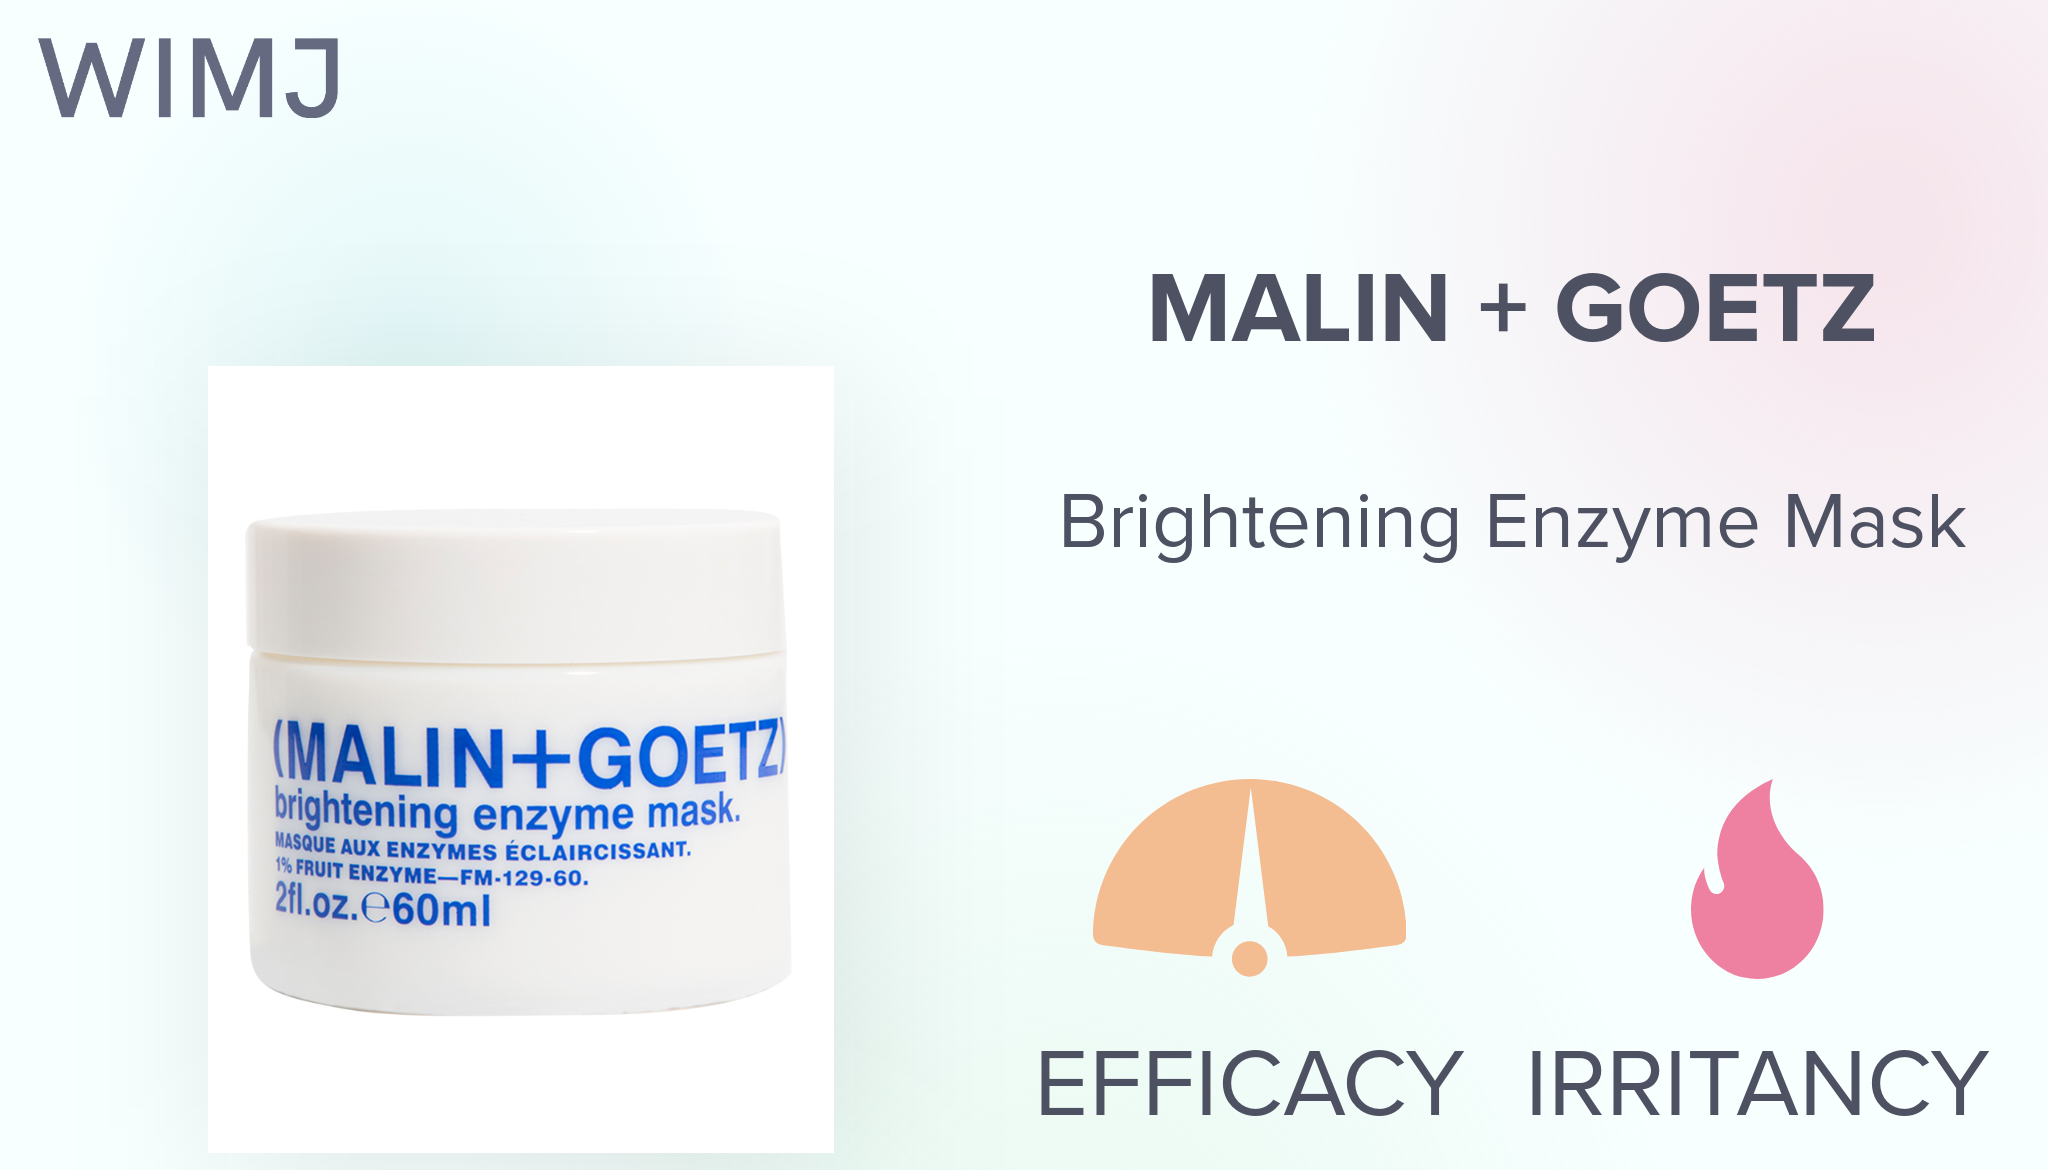 Asien bag Sinewi Review: MALIN + GOETZ - Brightening Enzyme Mask - WIMJ